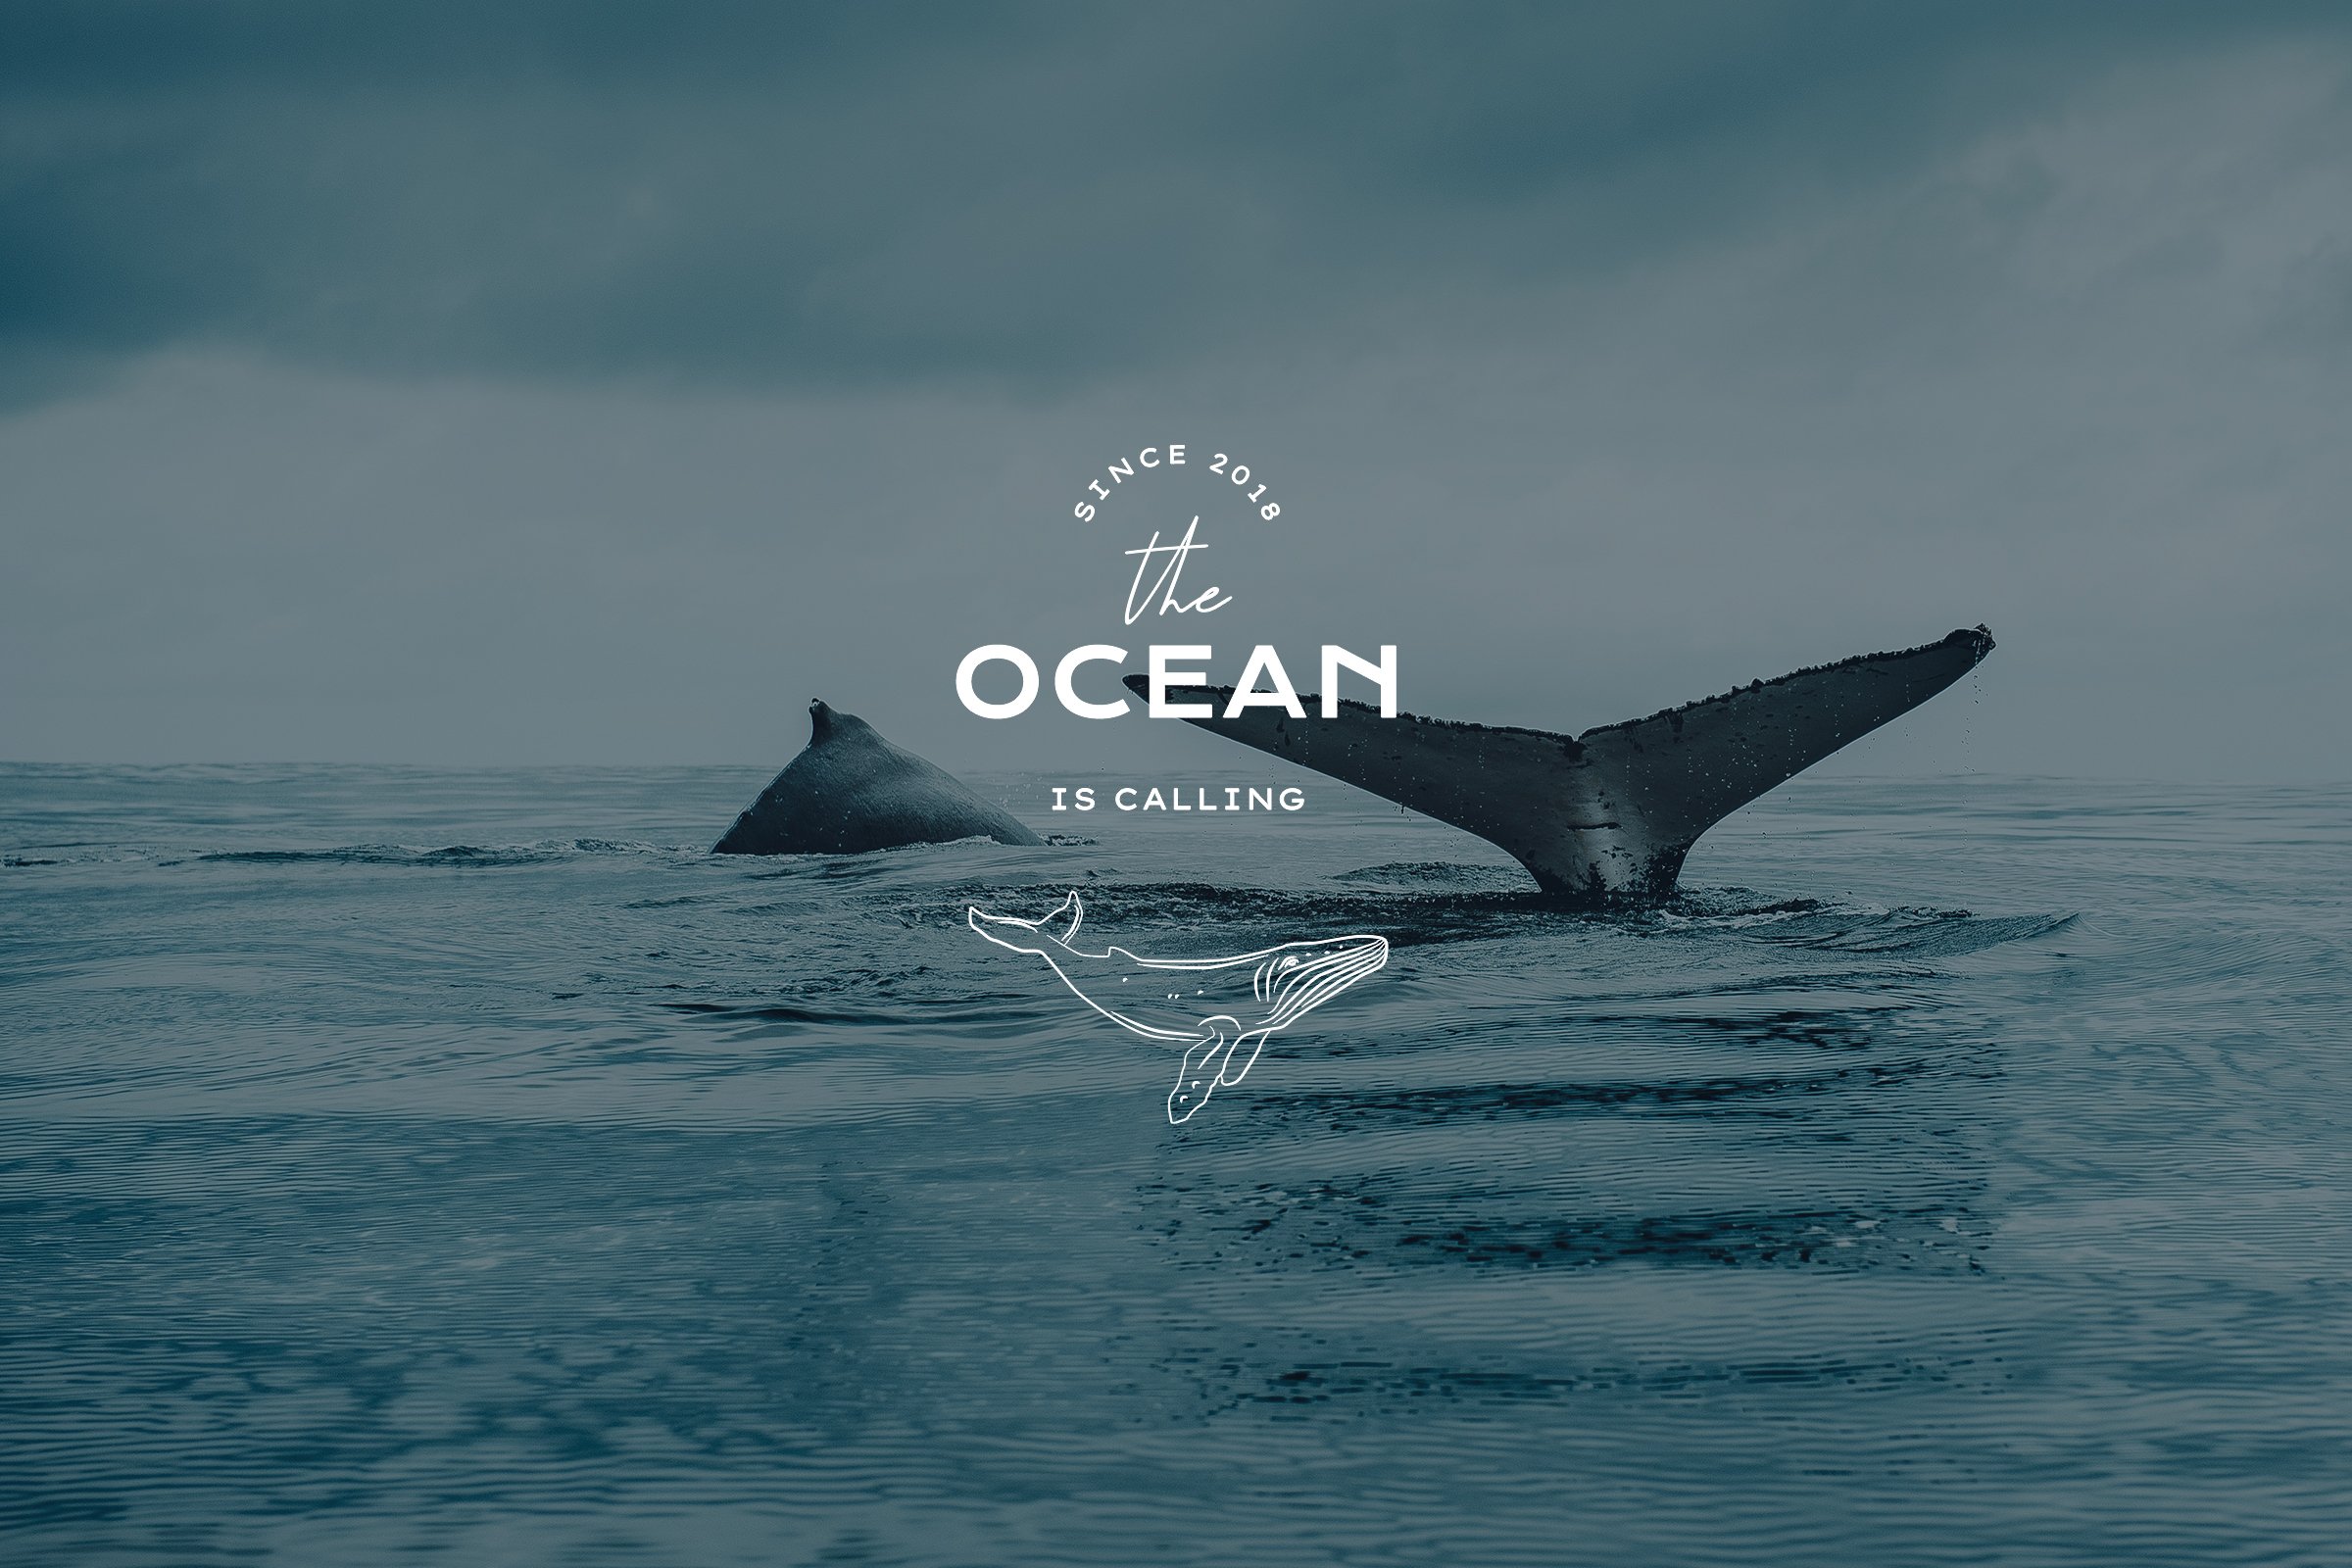 Perfect logo for an ocean brand.